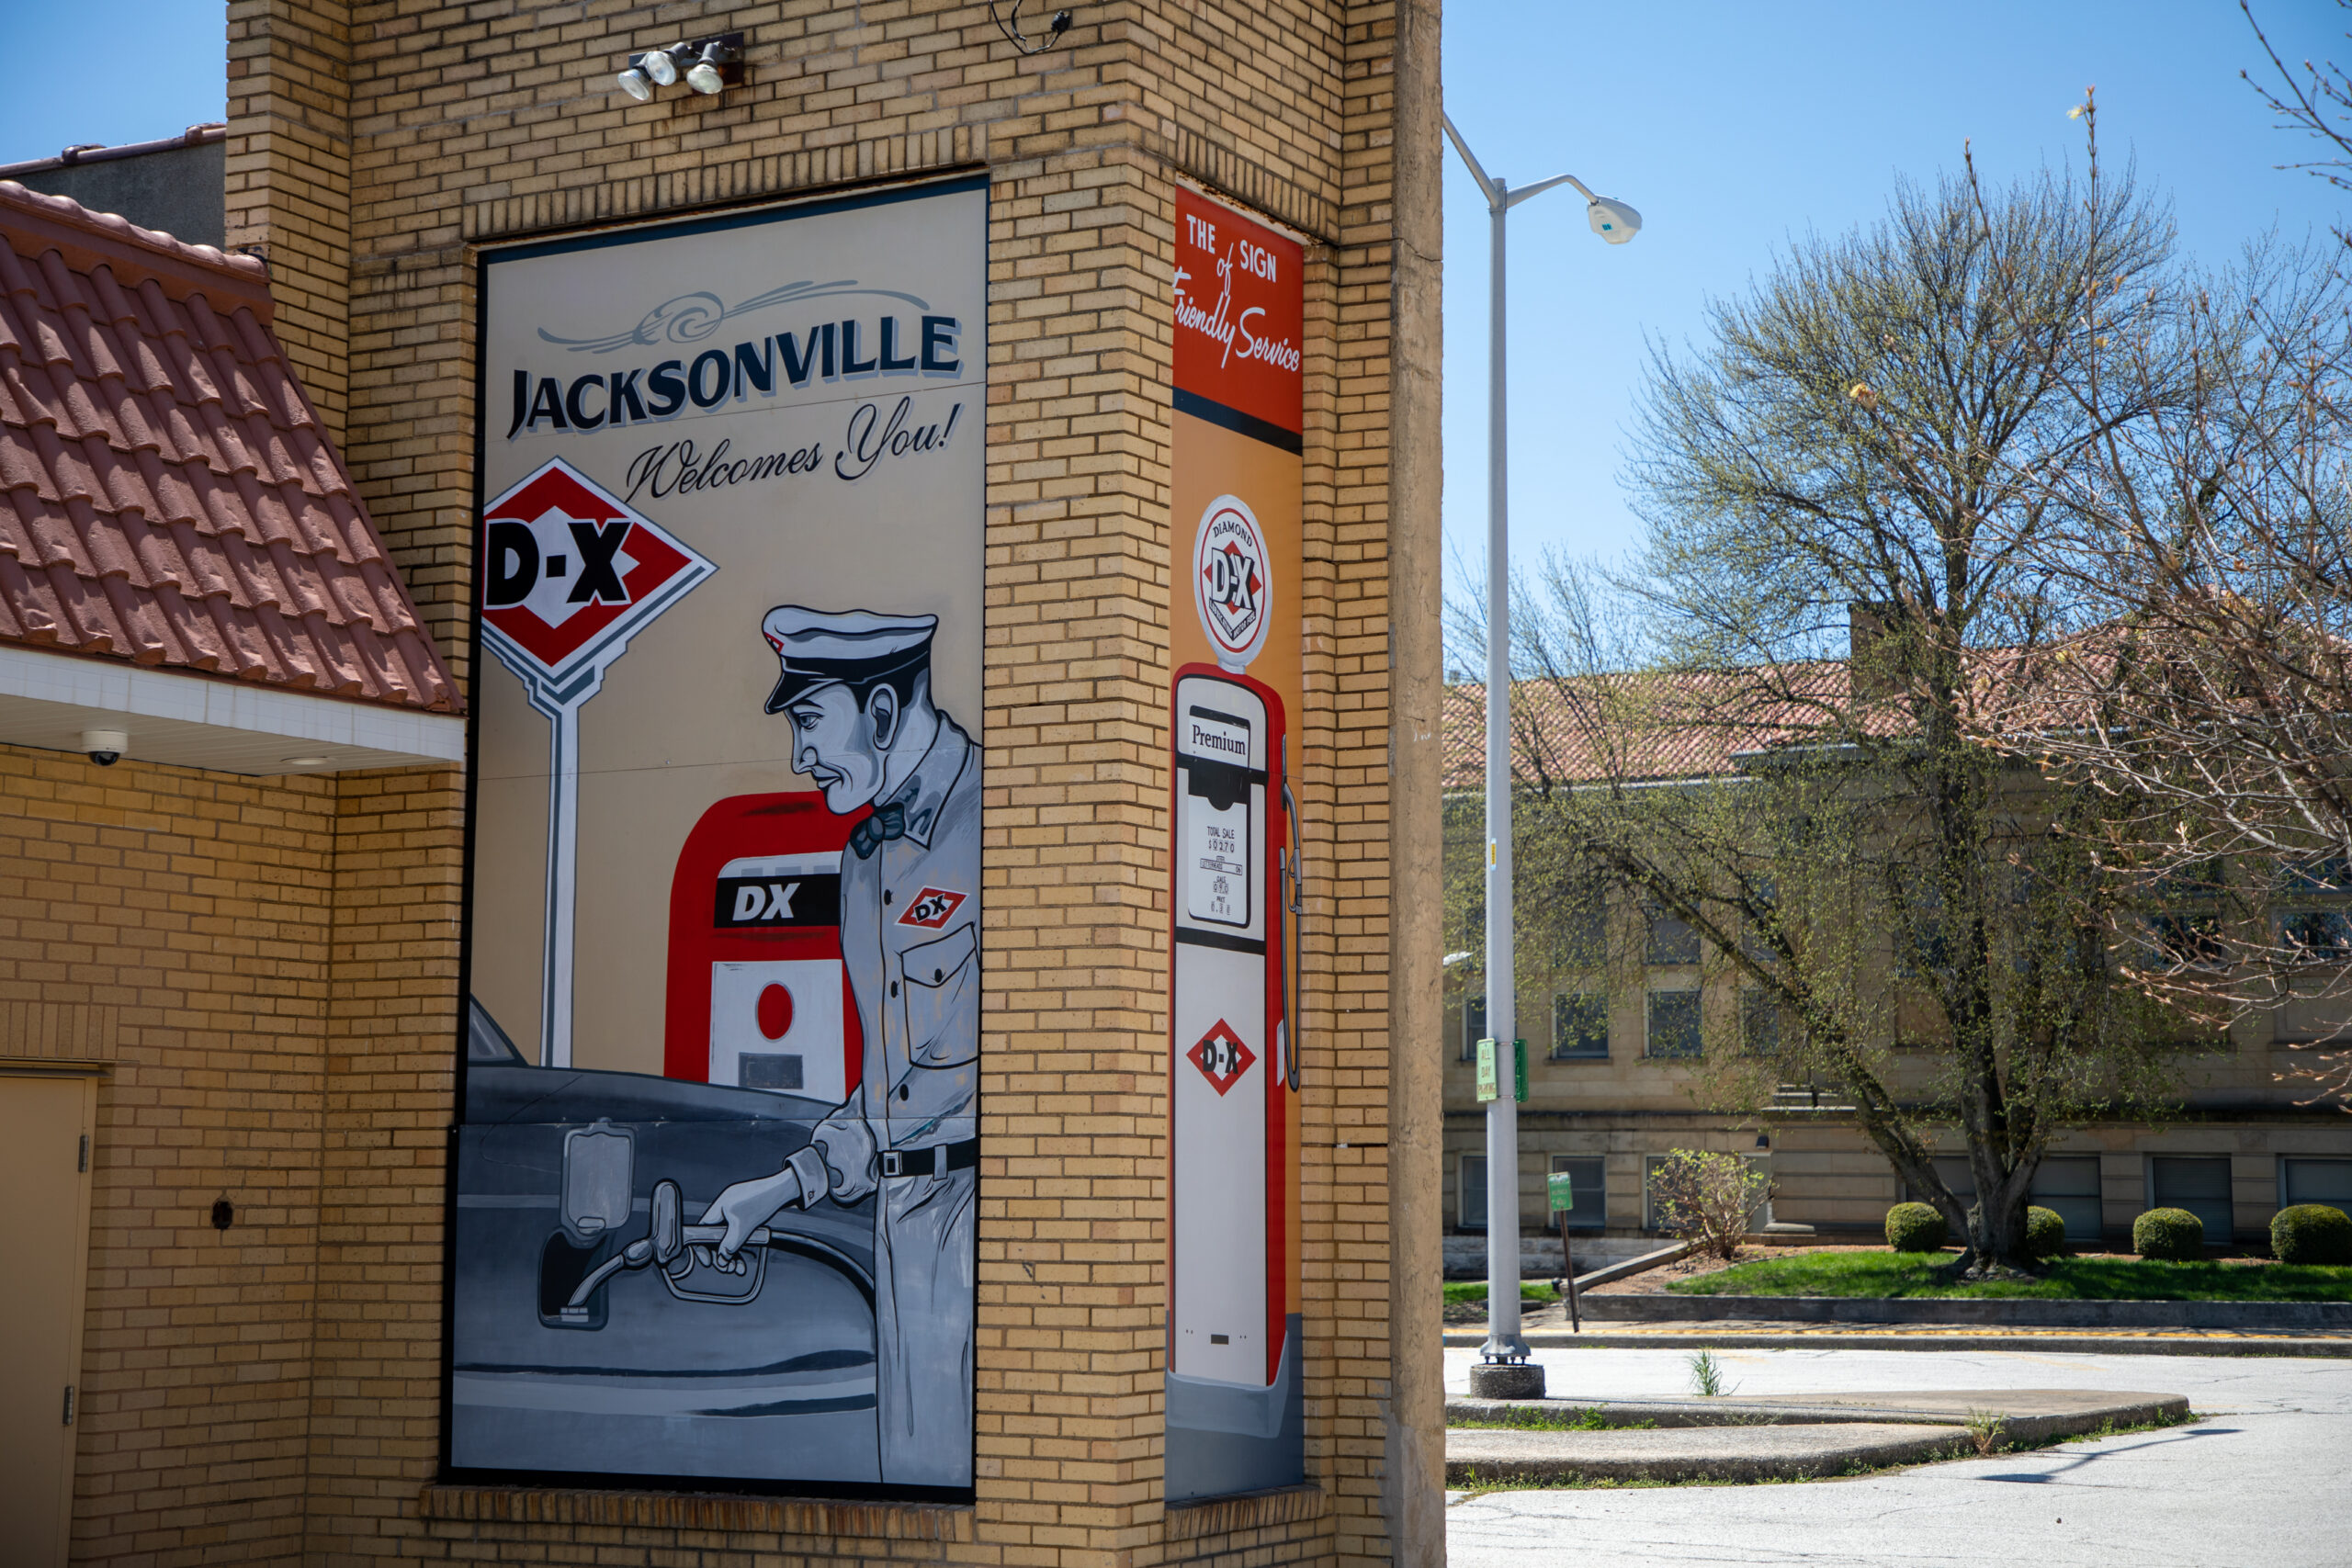 Jacksonville Welcomes You Walldog mural